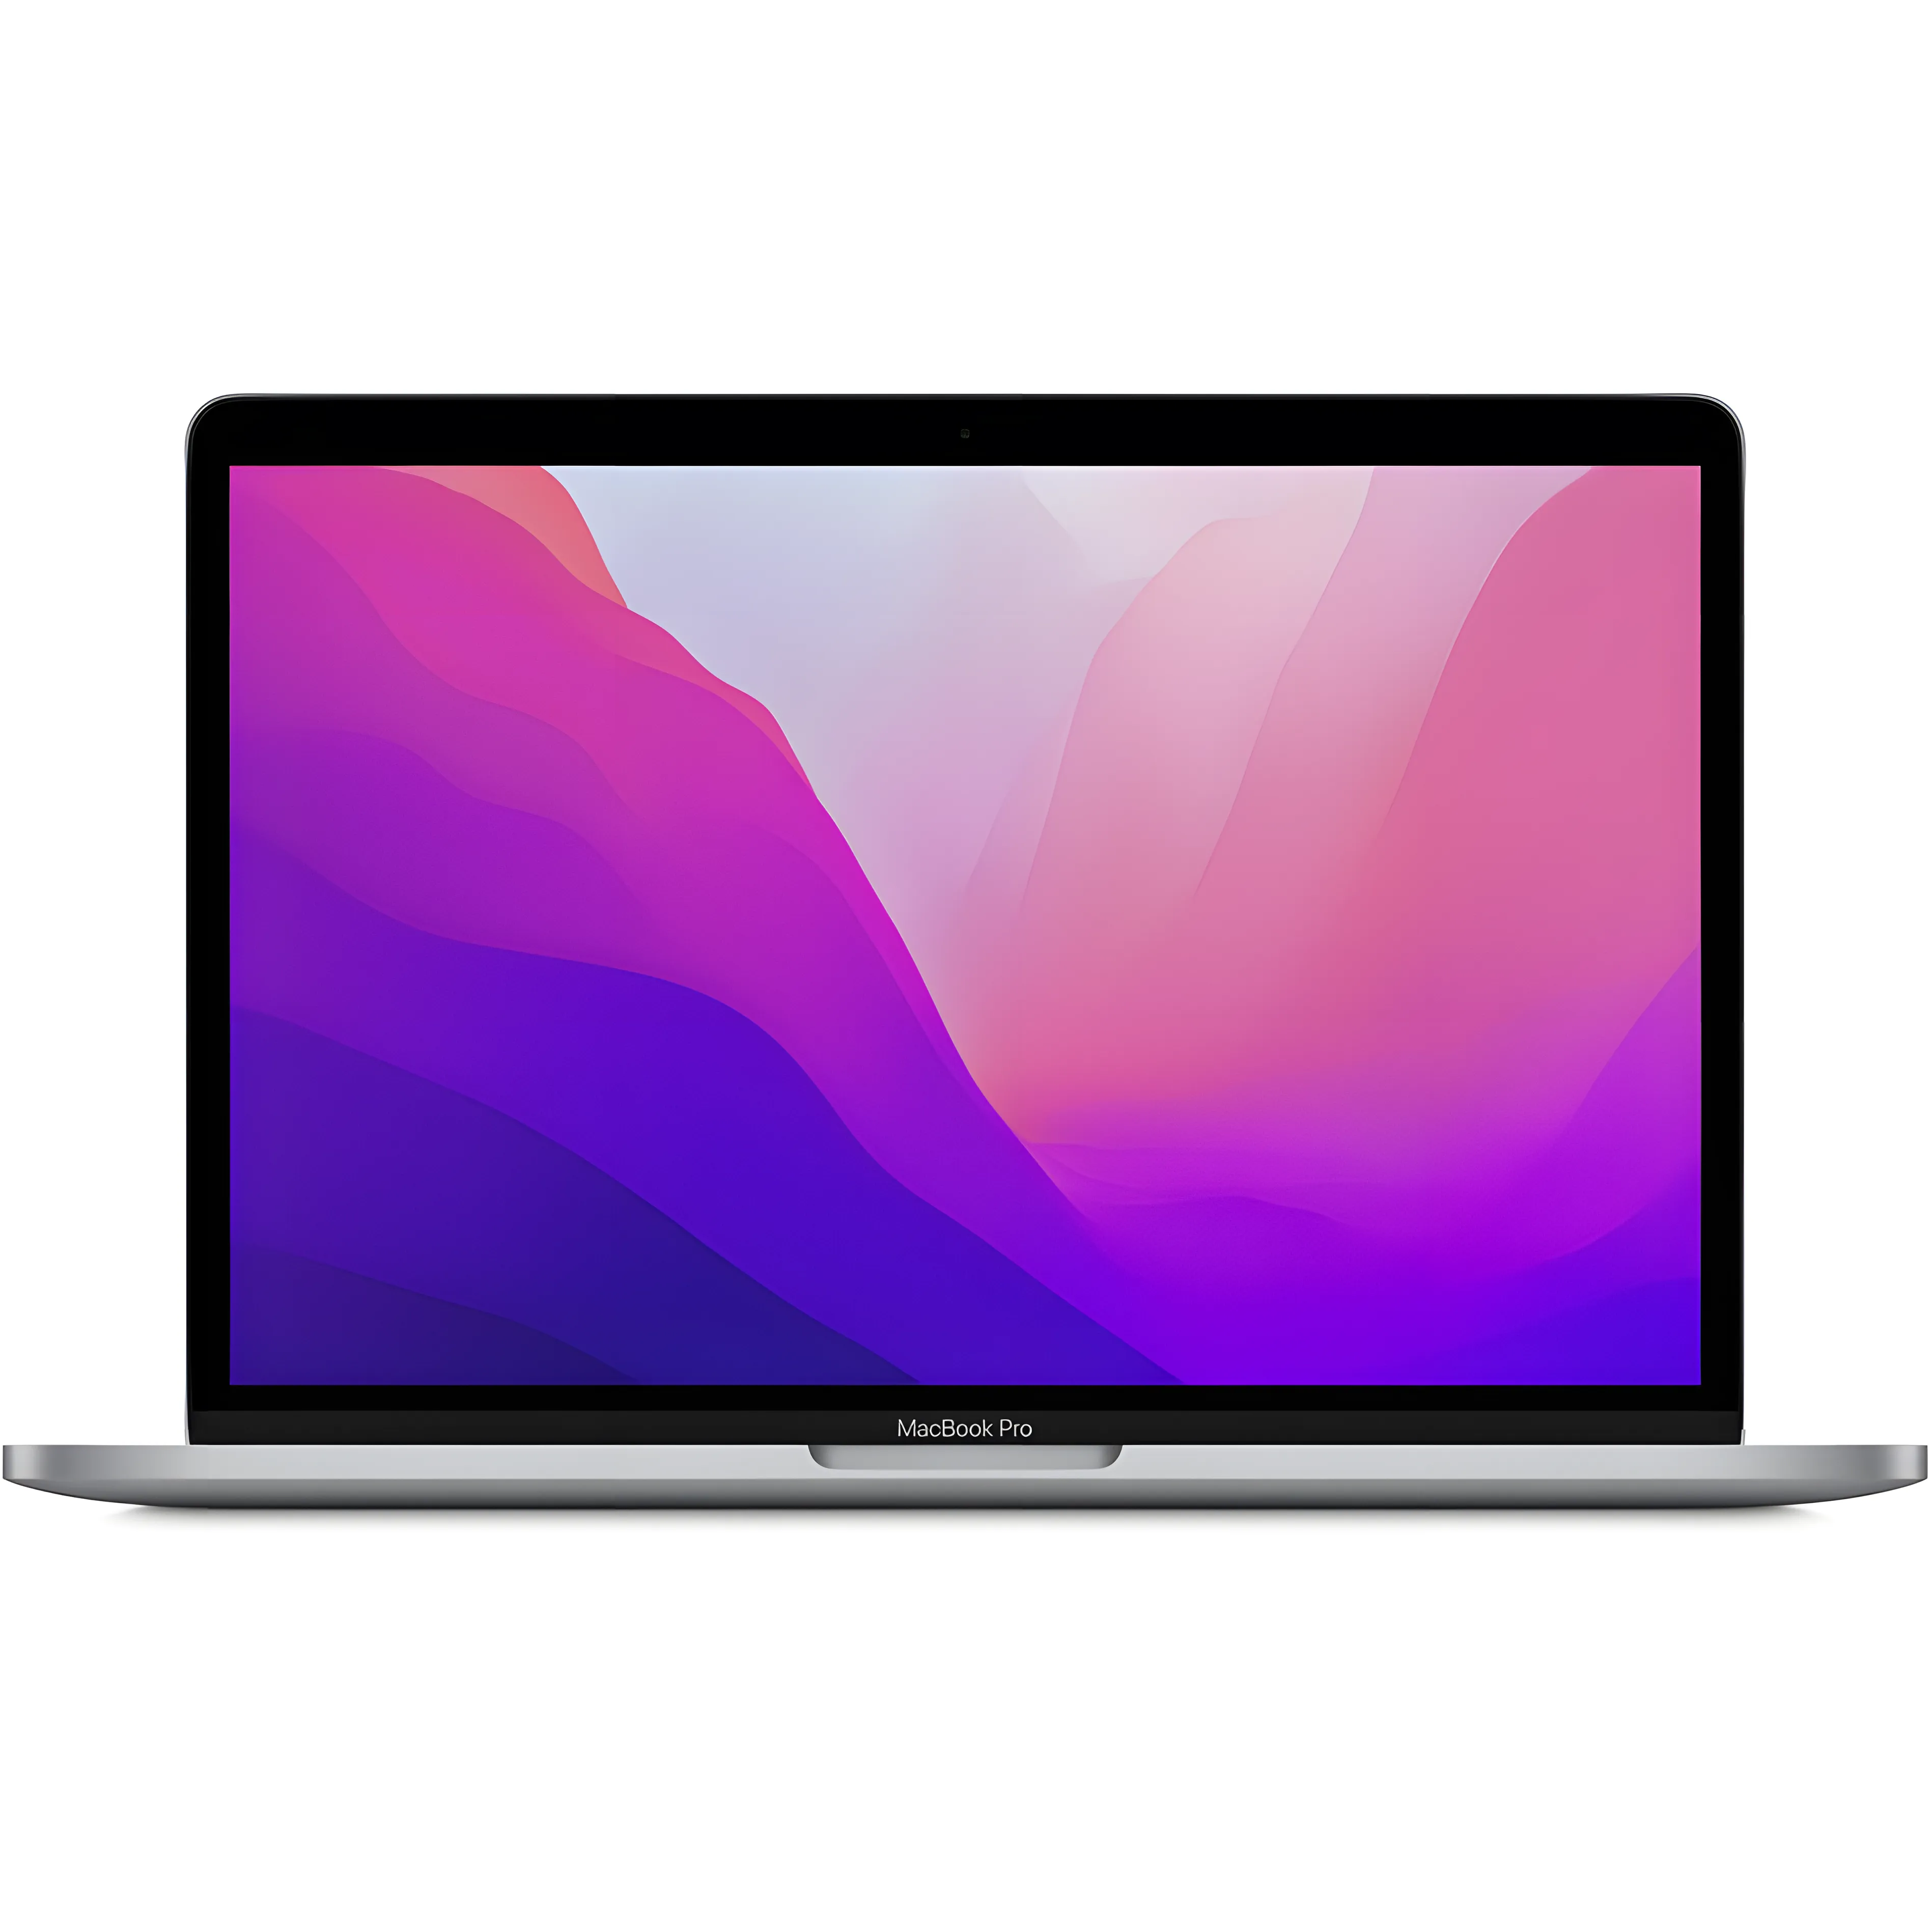 Free Macbook Pro (Worth £1,299)